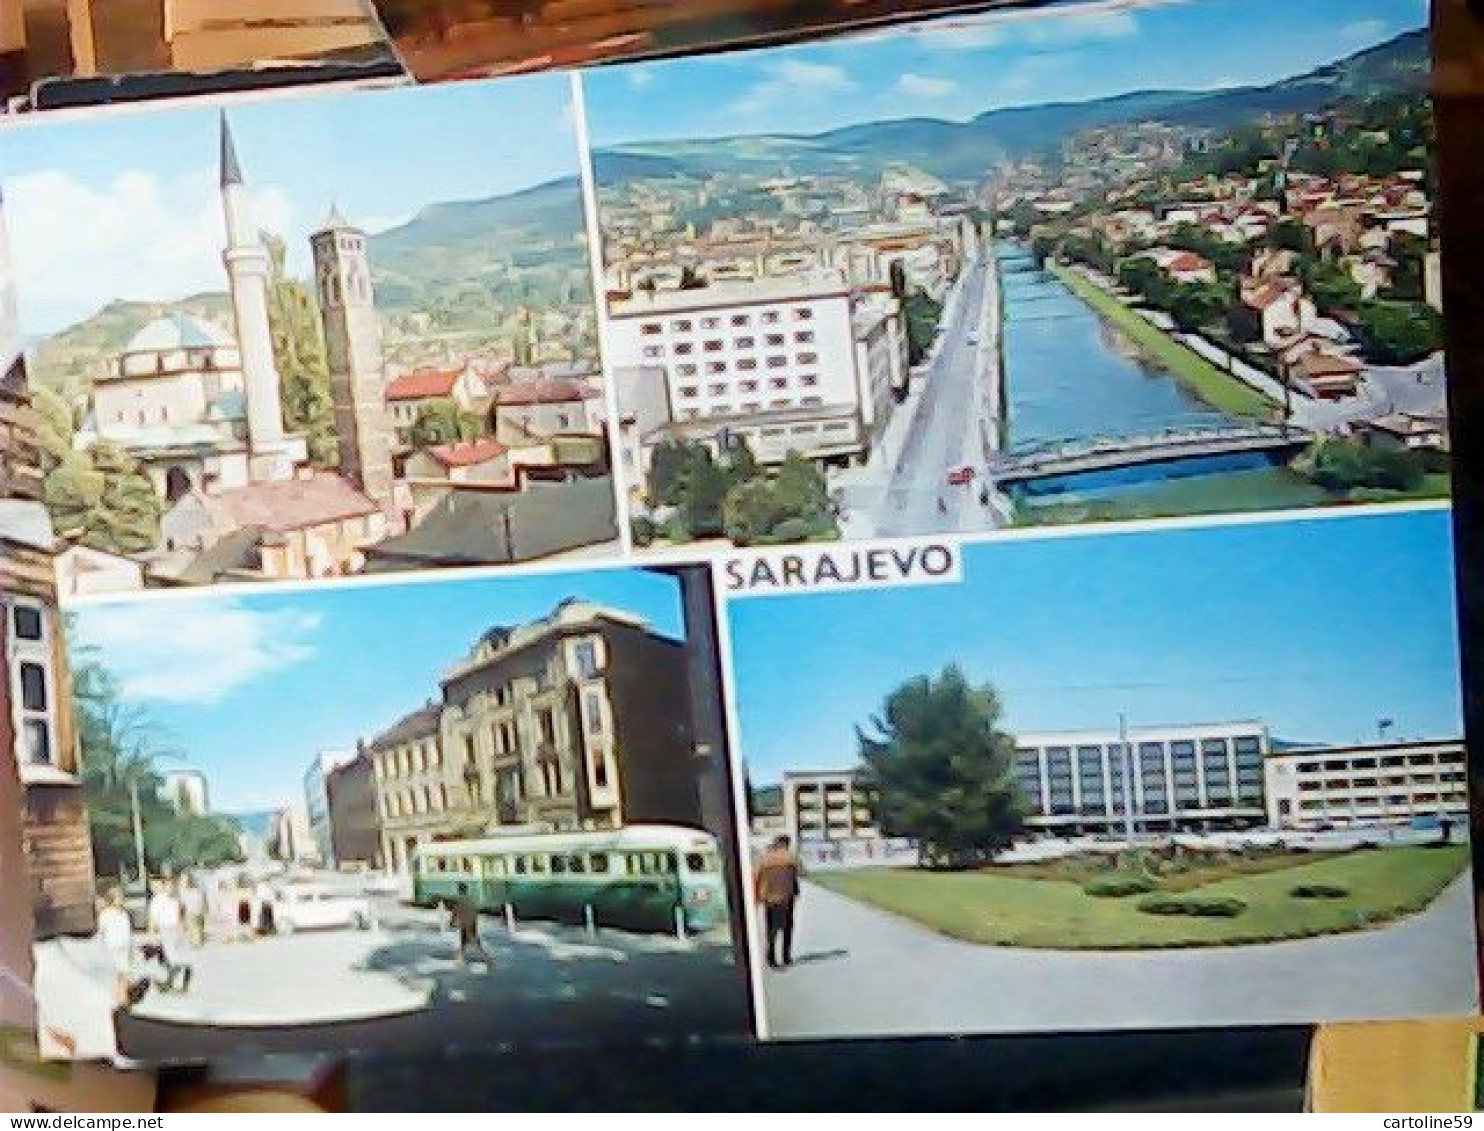 BOSNIA Sarajevo : TRAM / STRAßENBAHN, SKODA 1000, FIAT-ZASTAVA 600 V1971 JV6169 - Bosnia Y Herzegovina